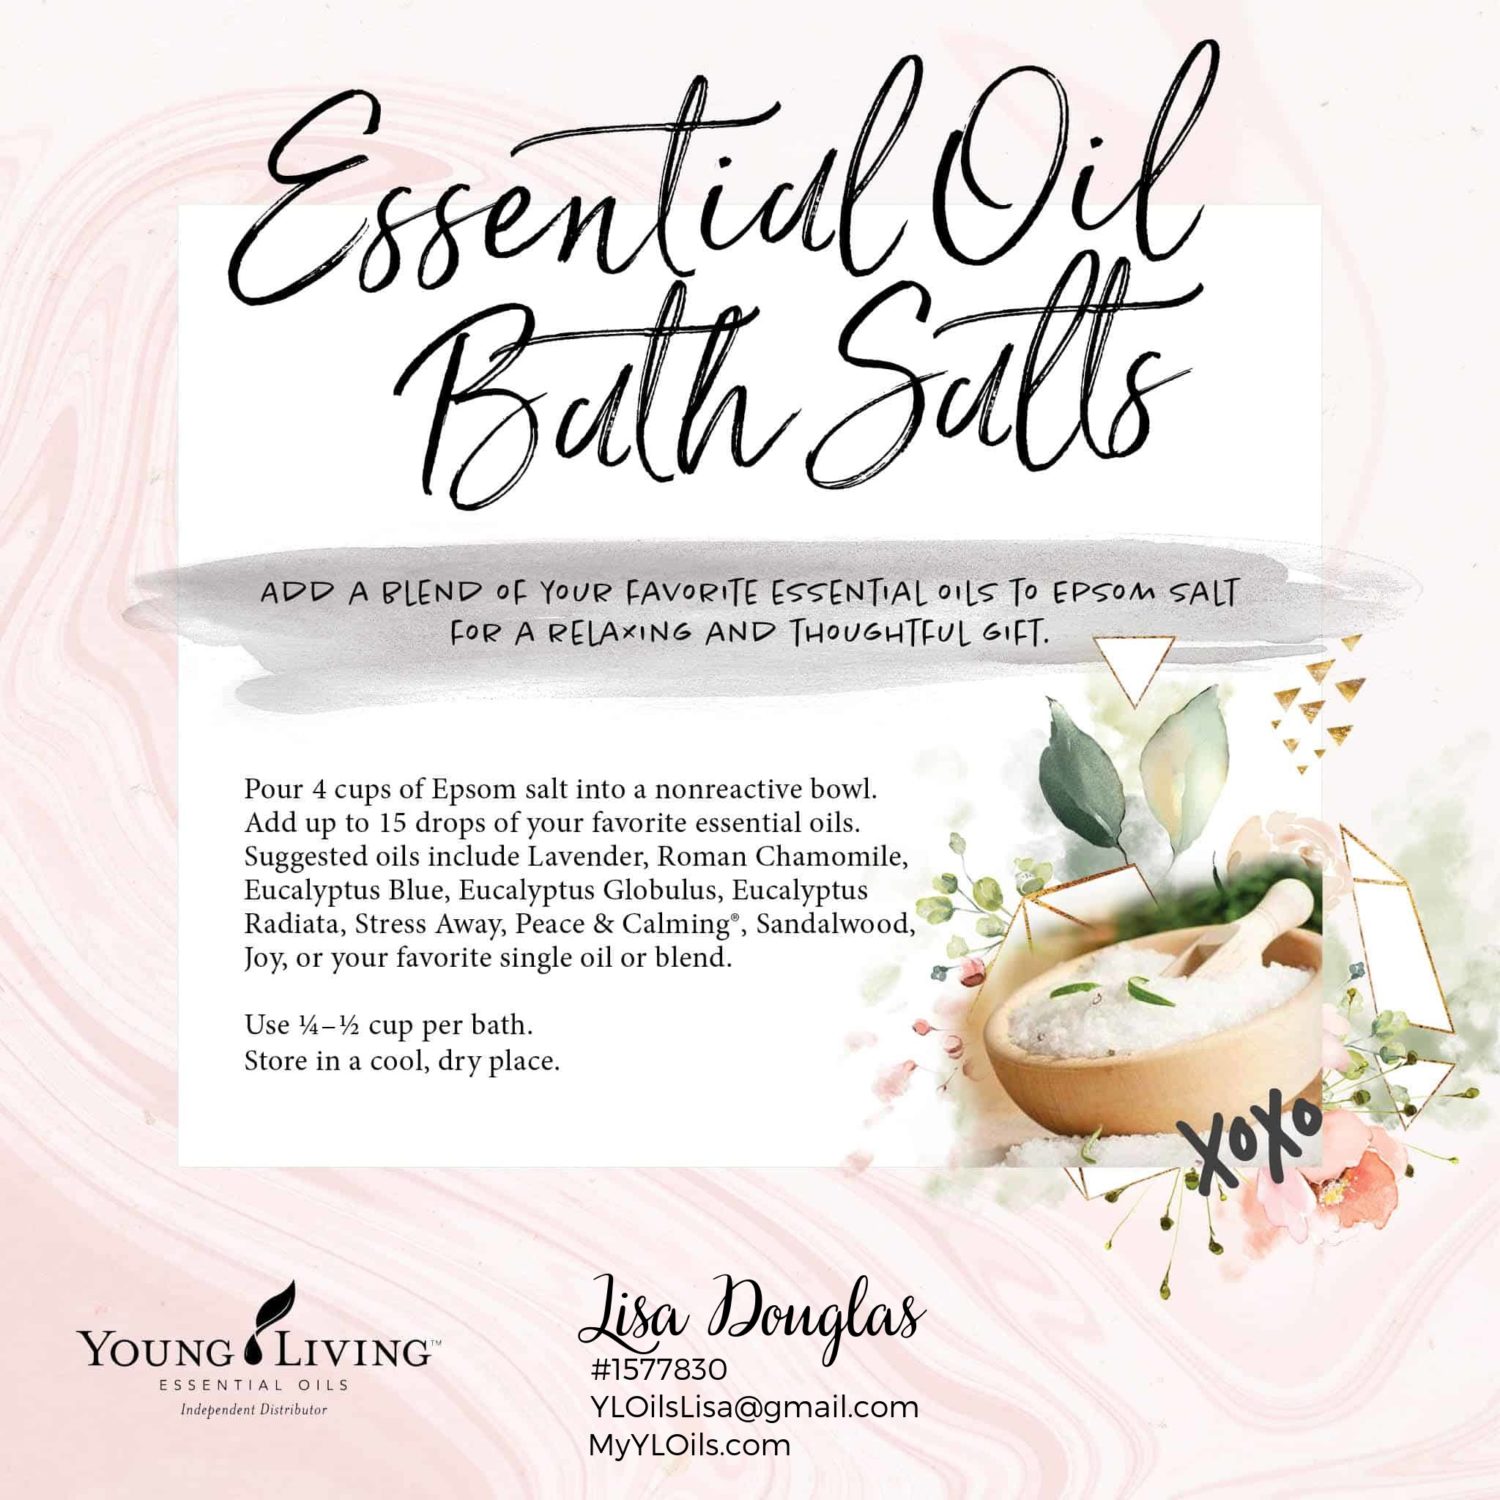 Valentine's Day Essential Oils Gift Guide - Bath Salts